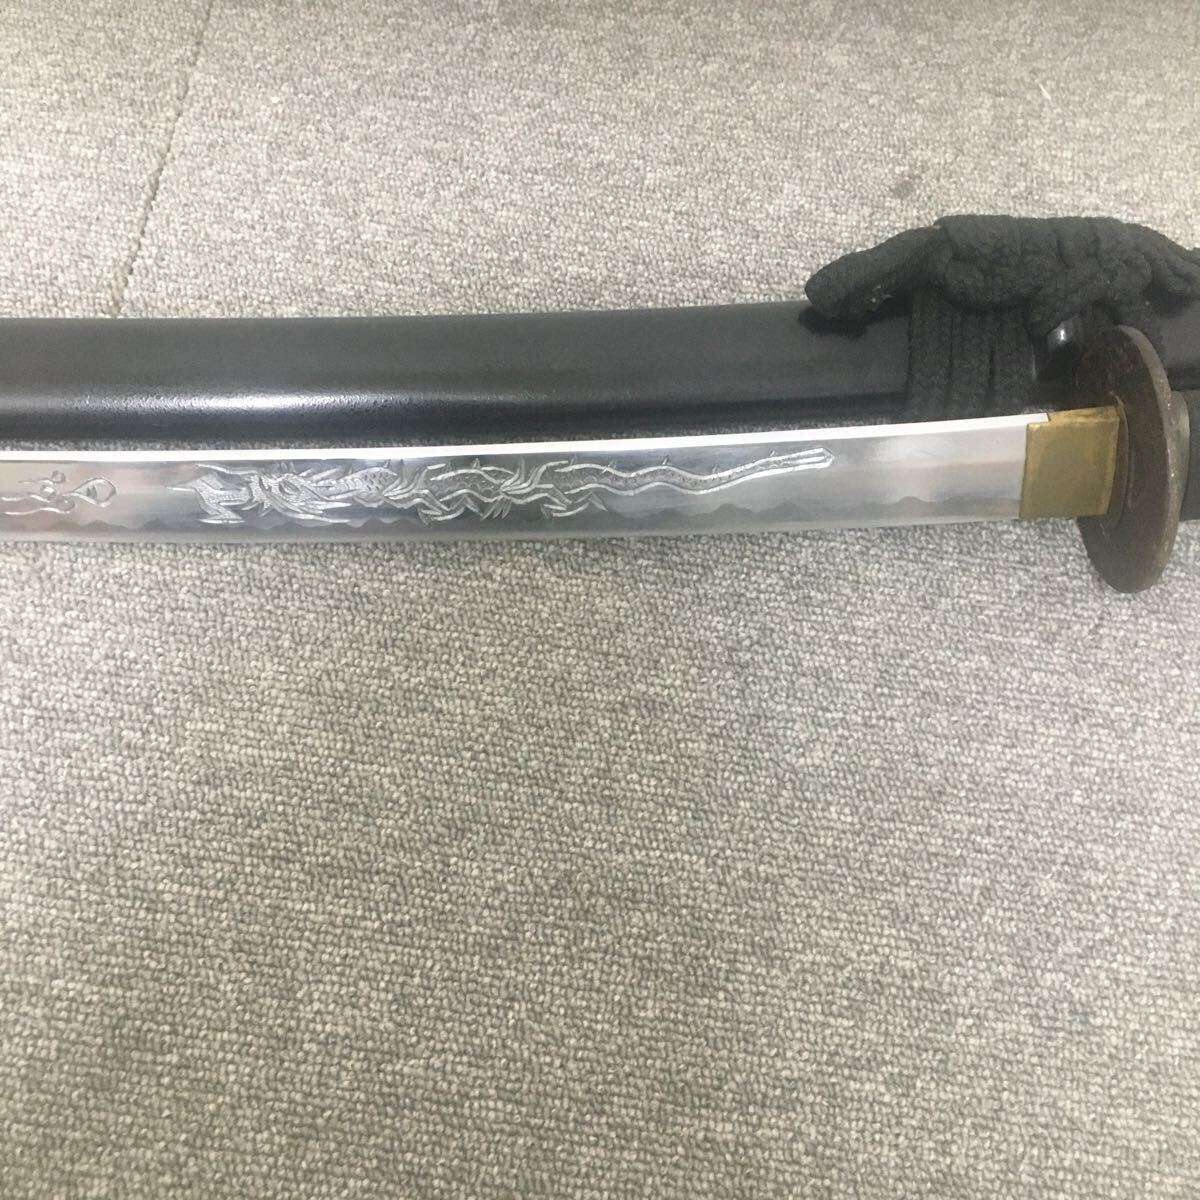  доспехи иммитация меча японский меч коллекция общая длина 100cm лезвие миграция 70cm J-504